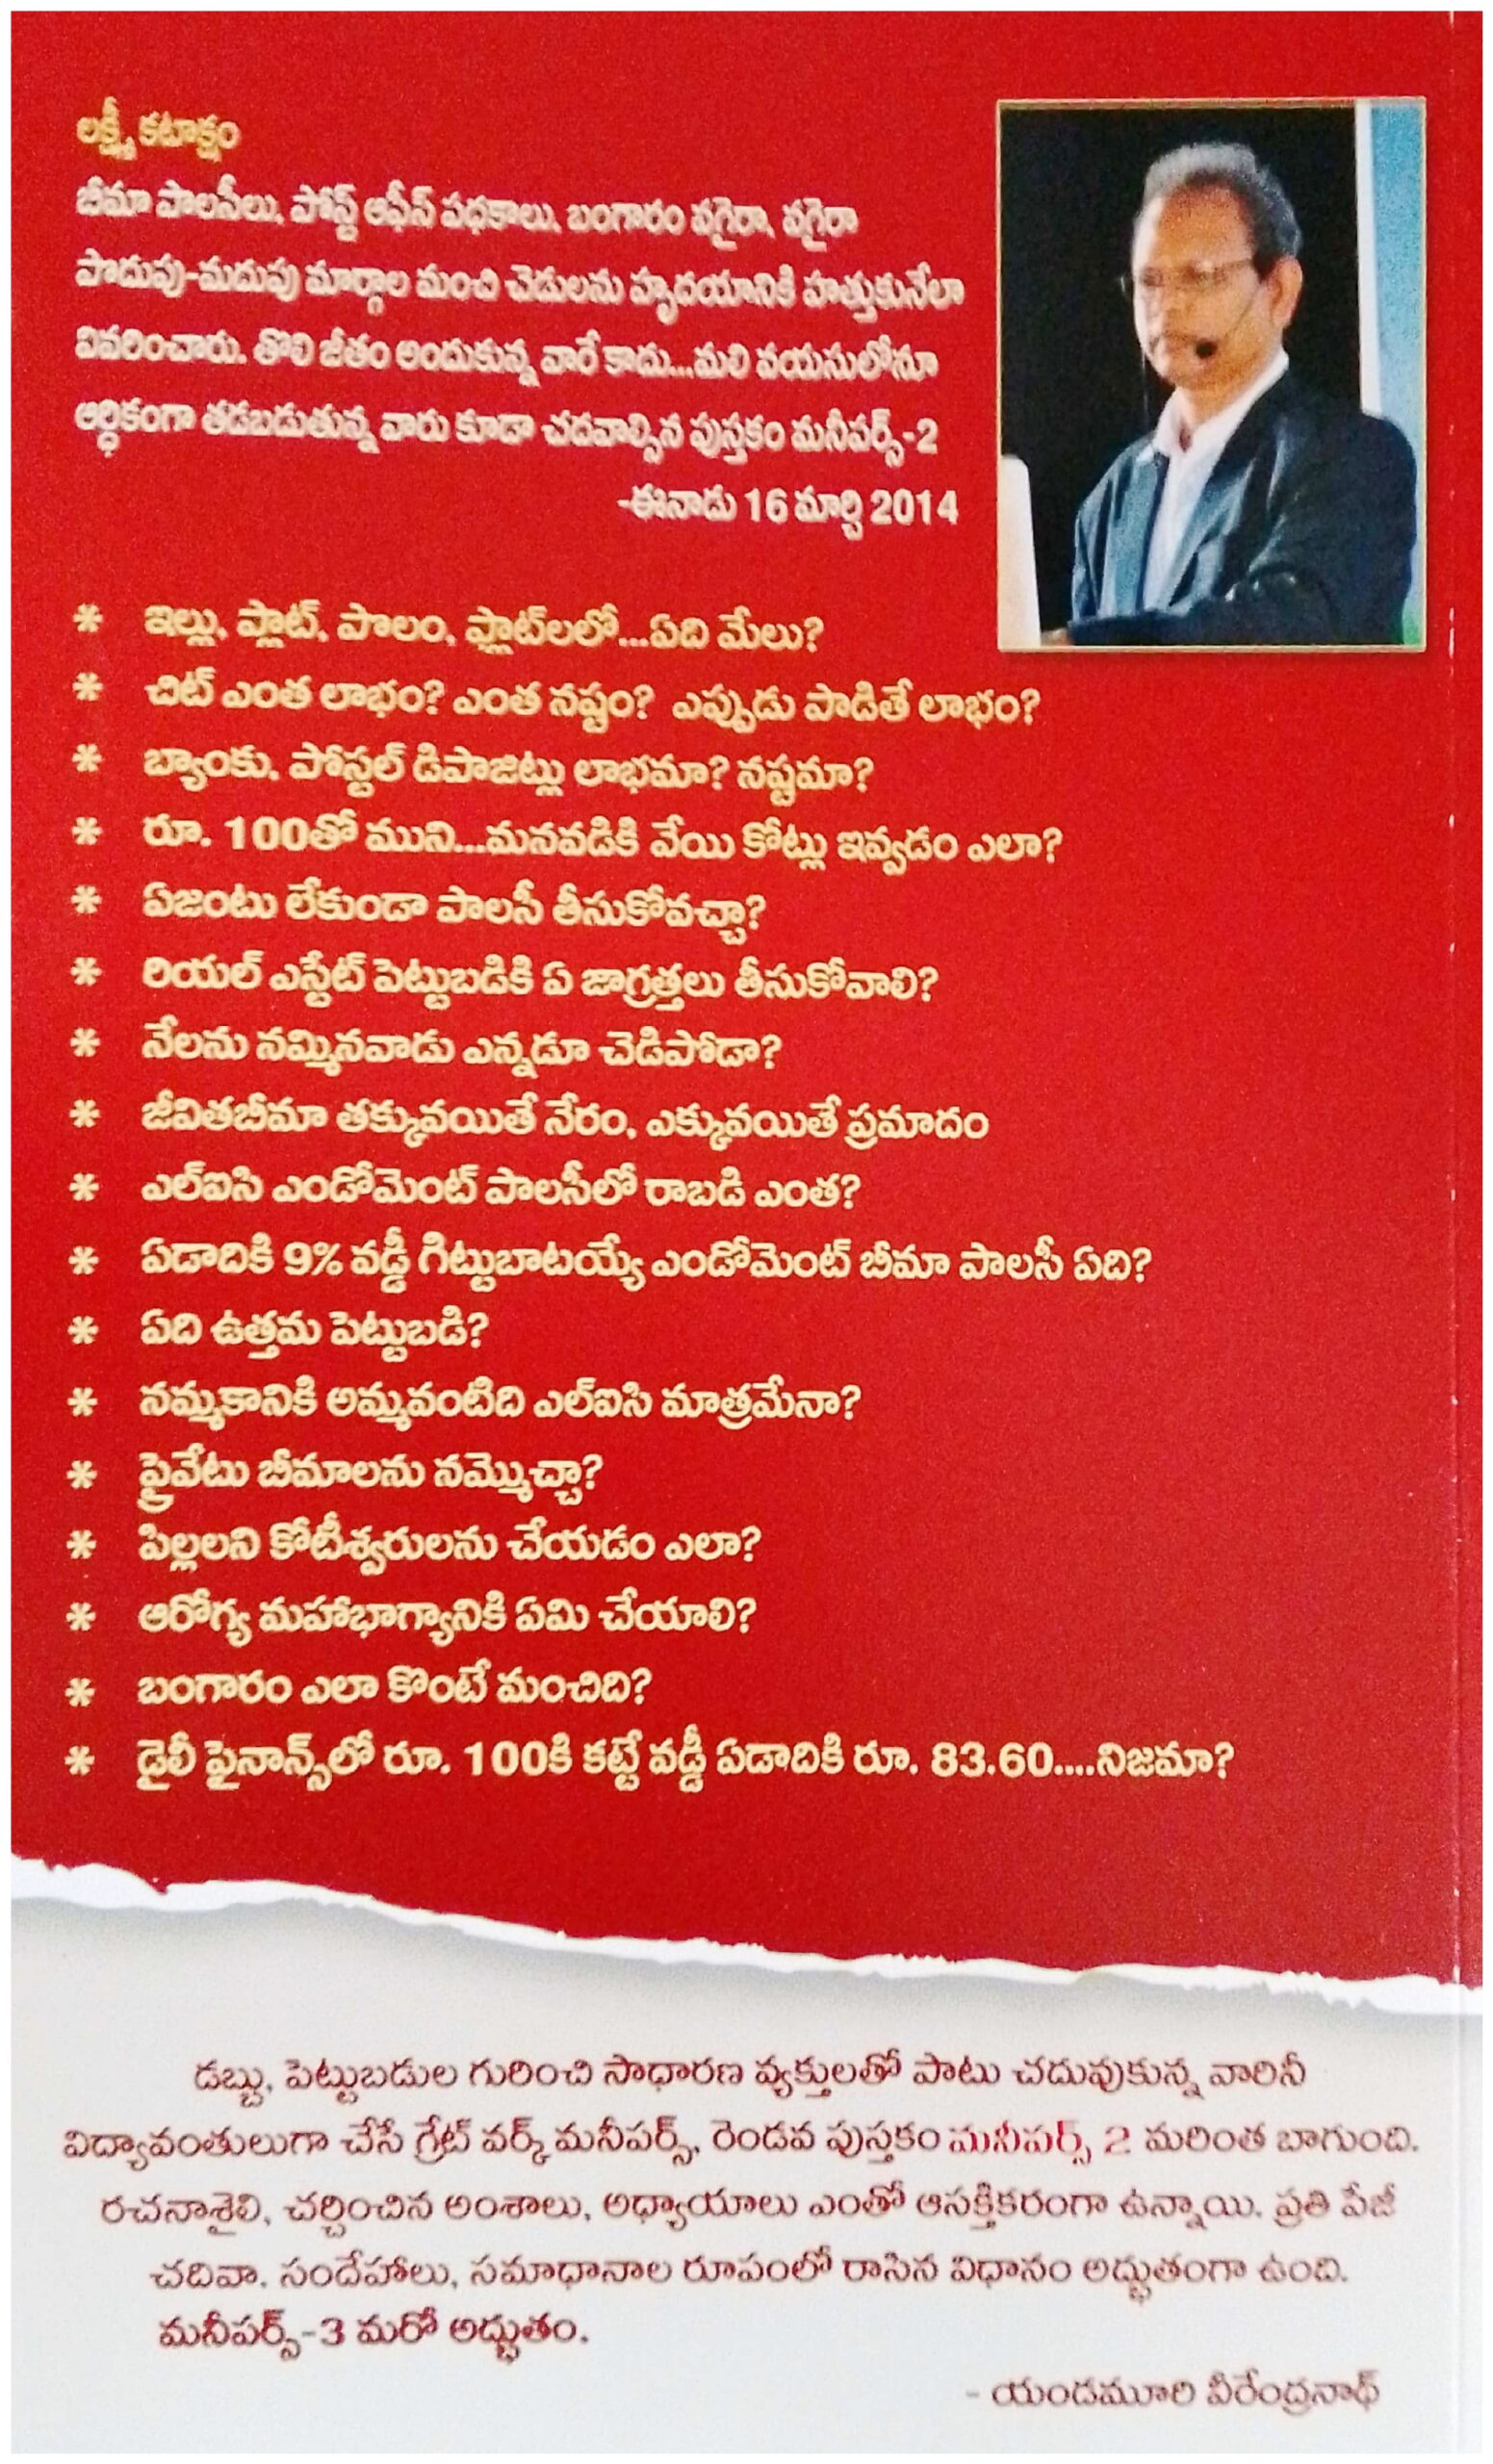 Vanga Rajendra Prasad - Money Purse-2 Sramaleni Aadaayam 5th edition in 2  1/2 years released | Facebook